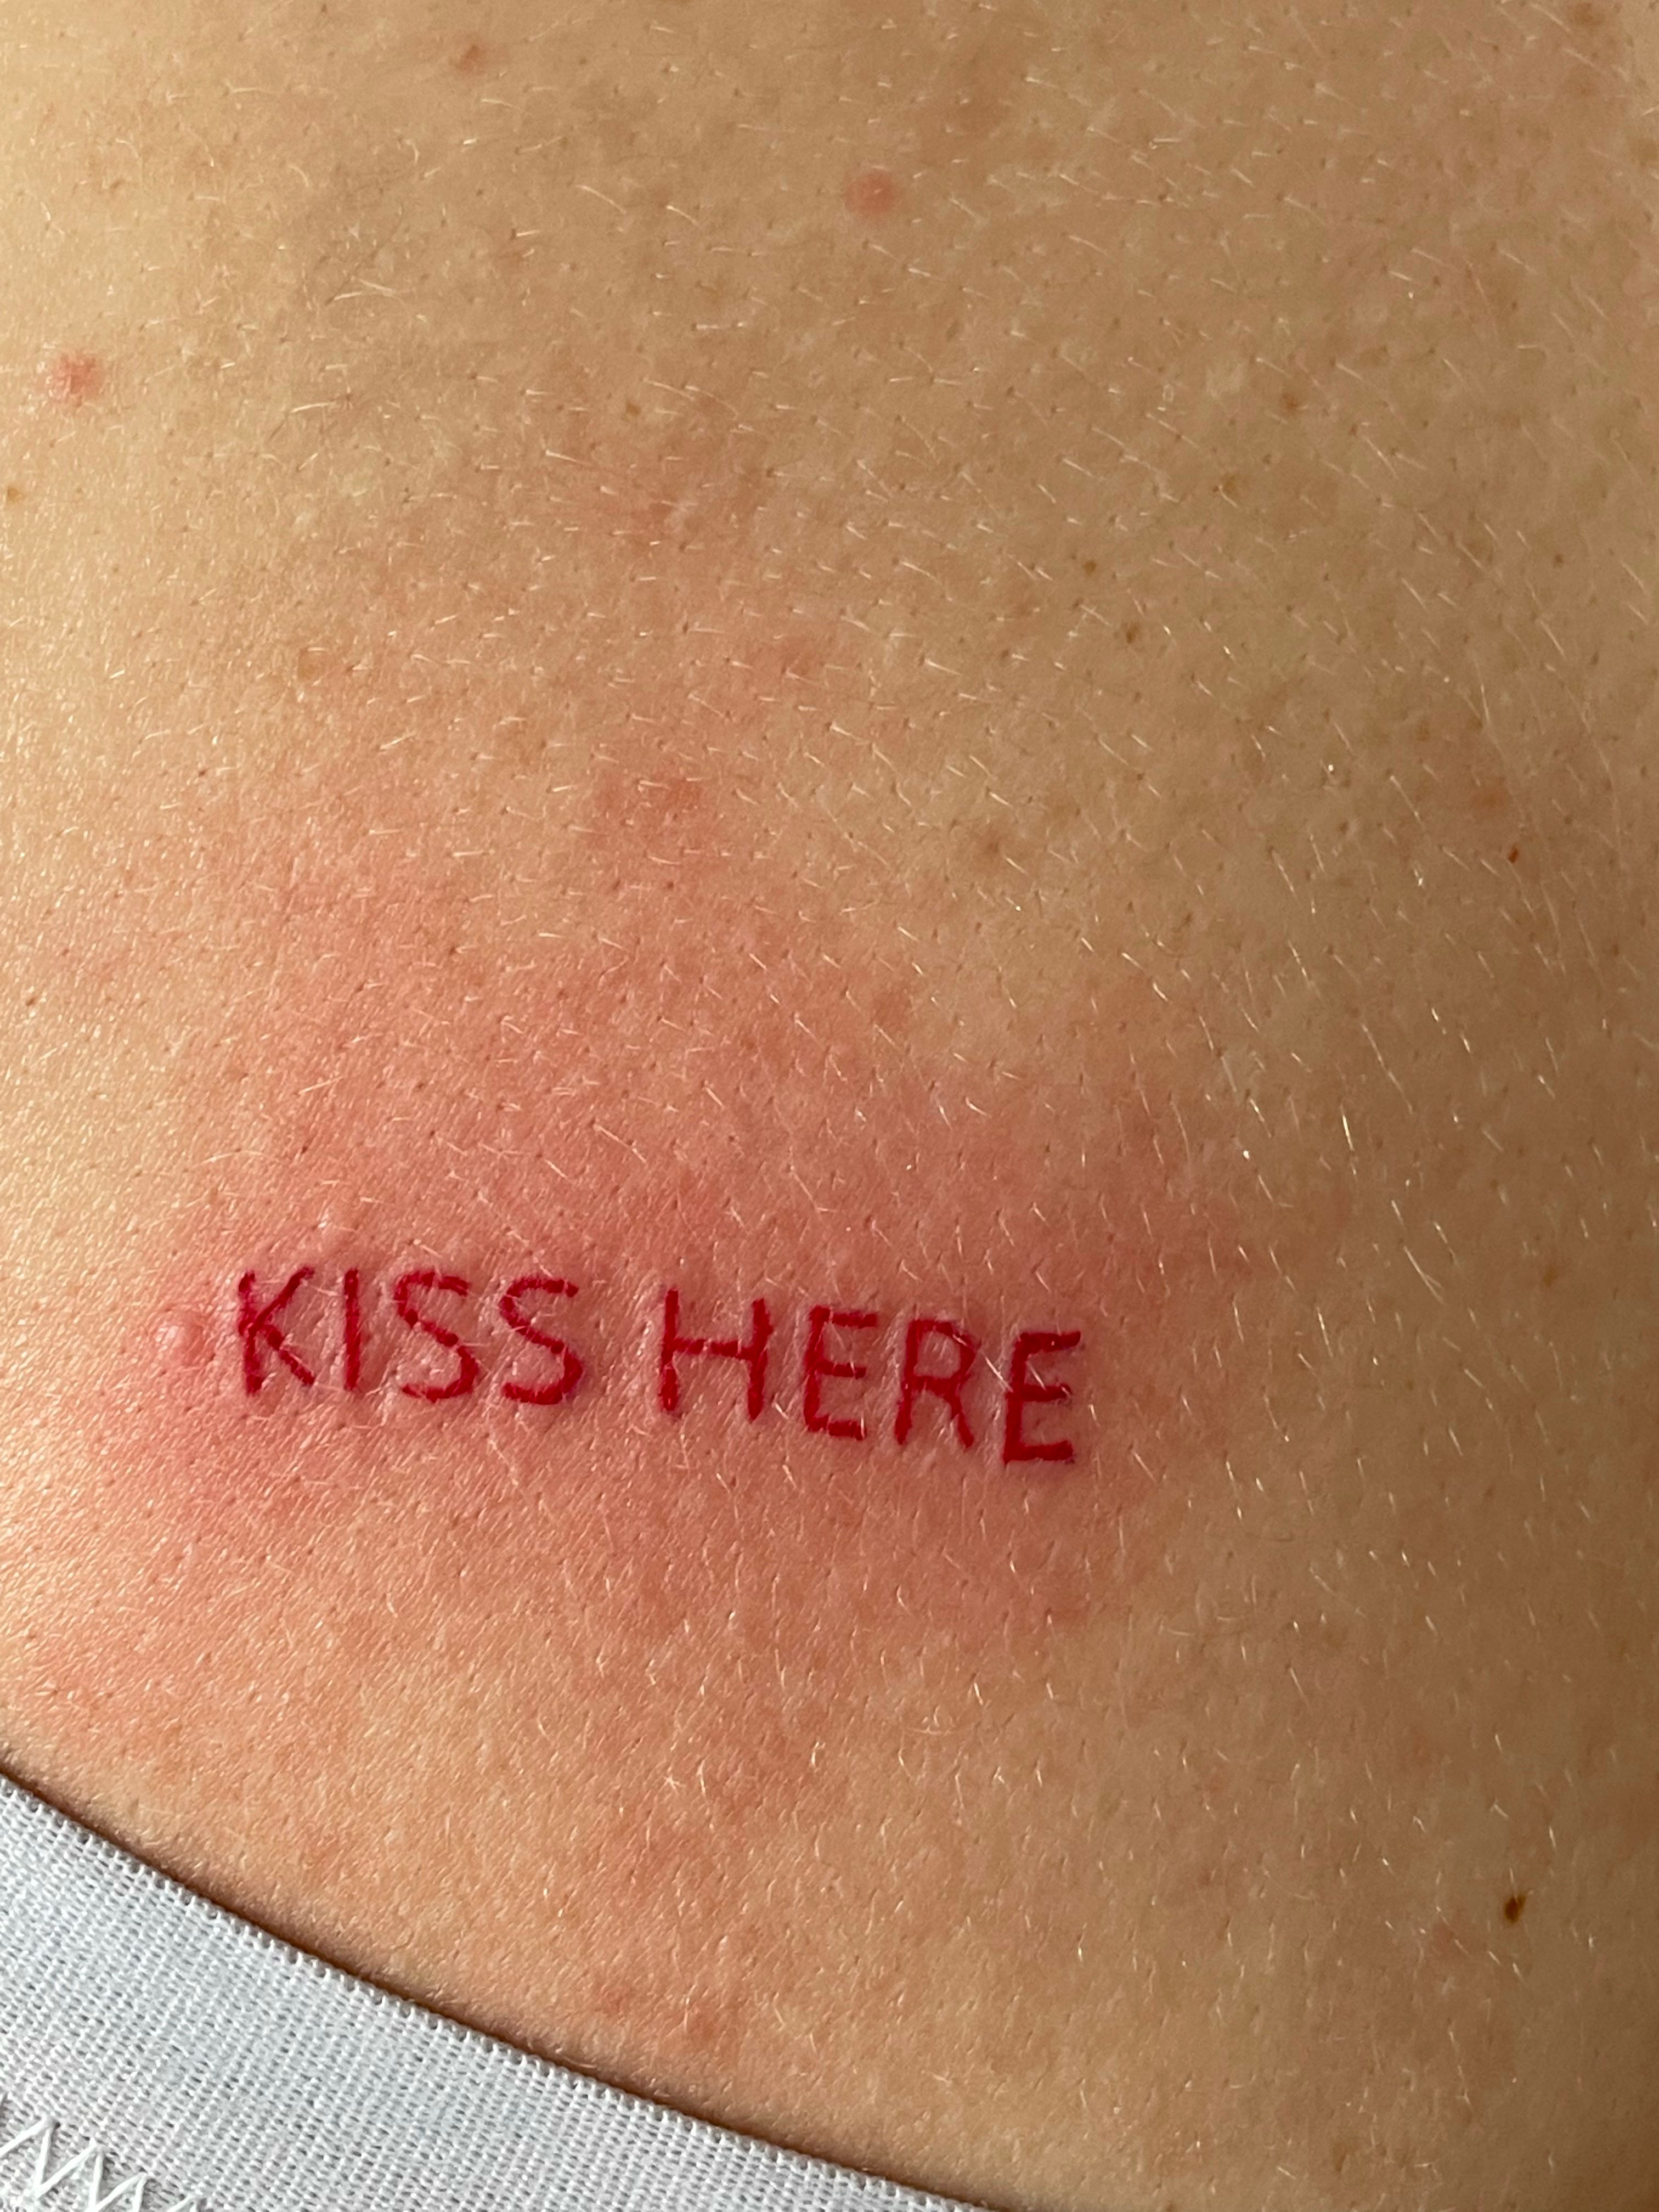 Tatuaje: Frase: Kiss here por Vivo Tattoo Studio - Tatuajes para Mujeres |  Estudio de tatuajes, Tatuaje a tope, Tatuajes de kiss